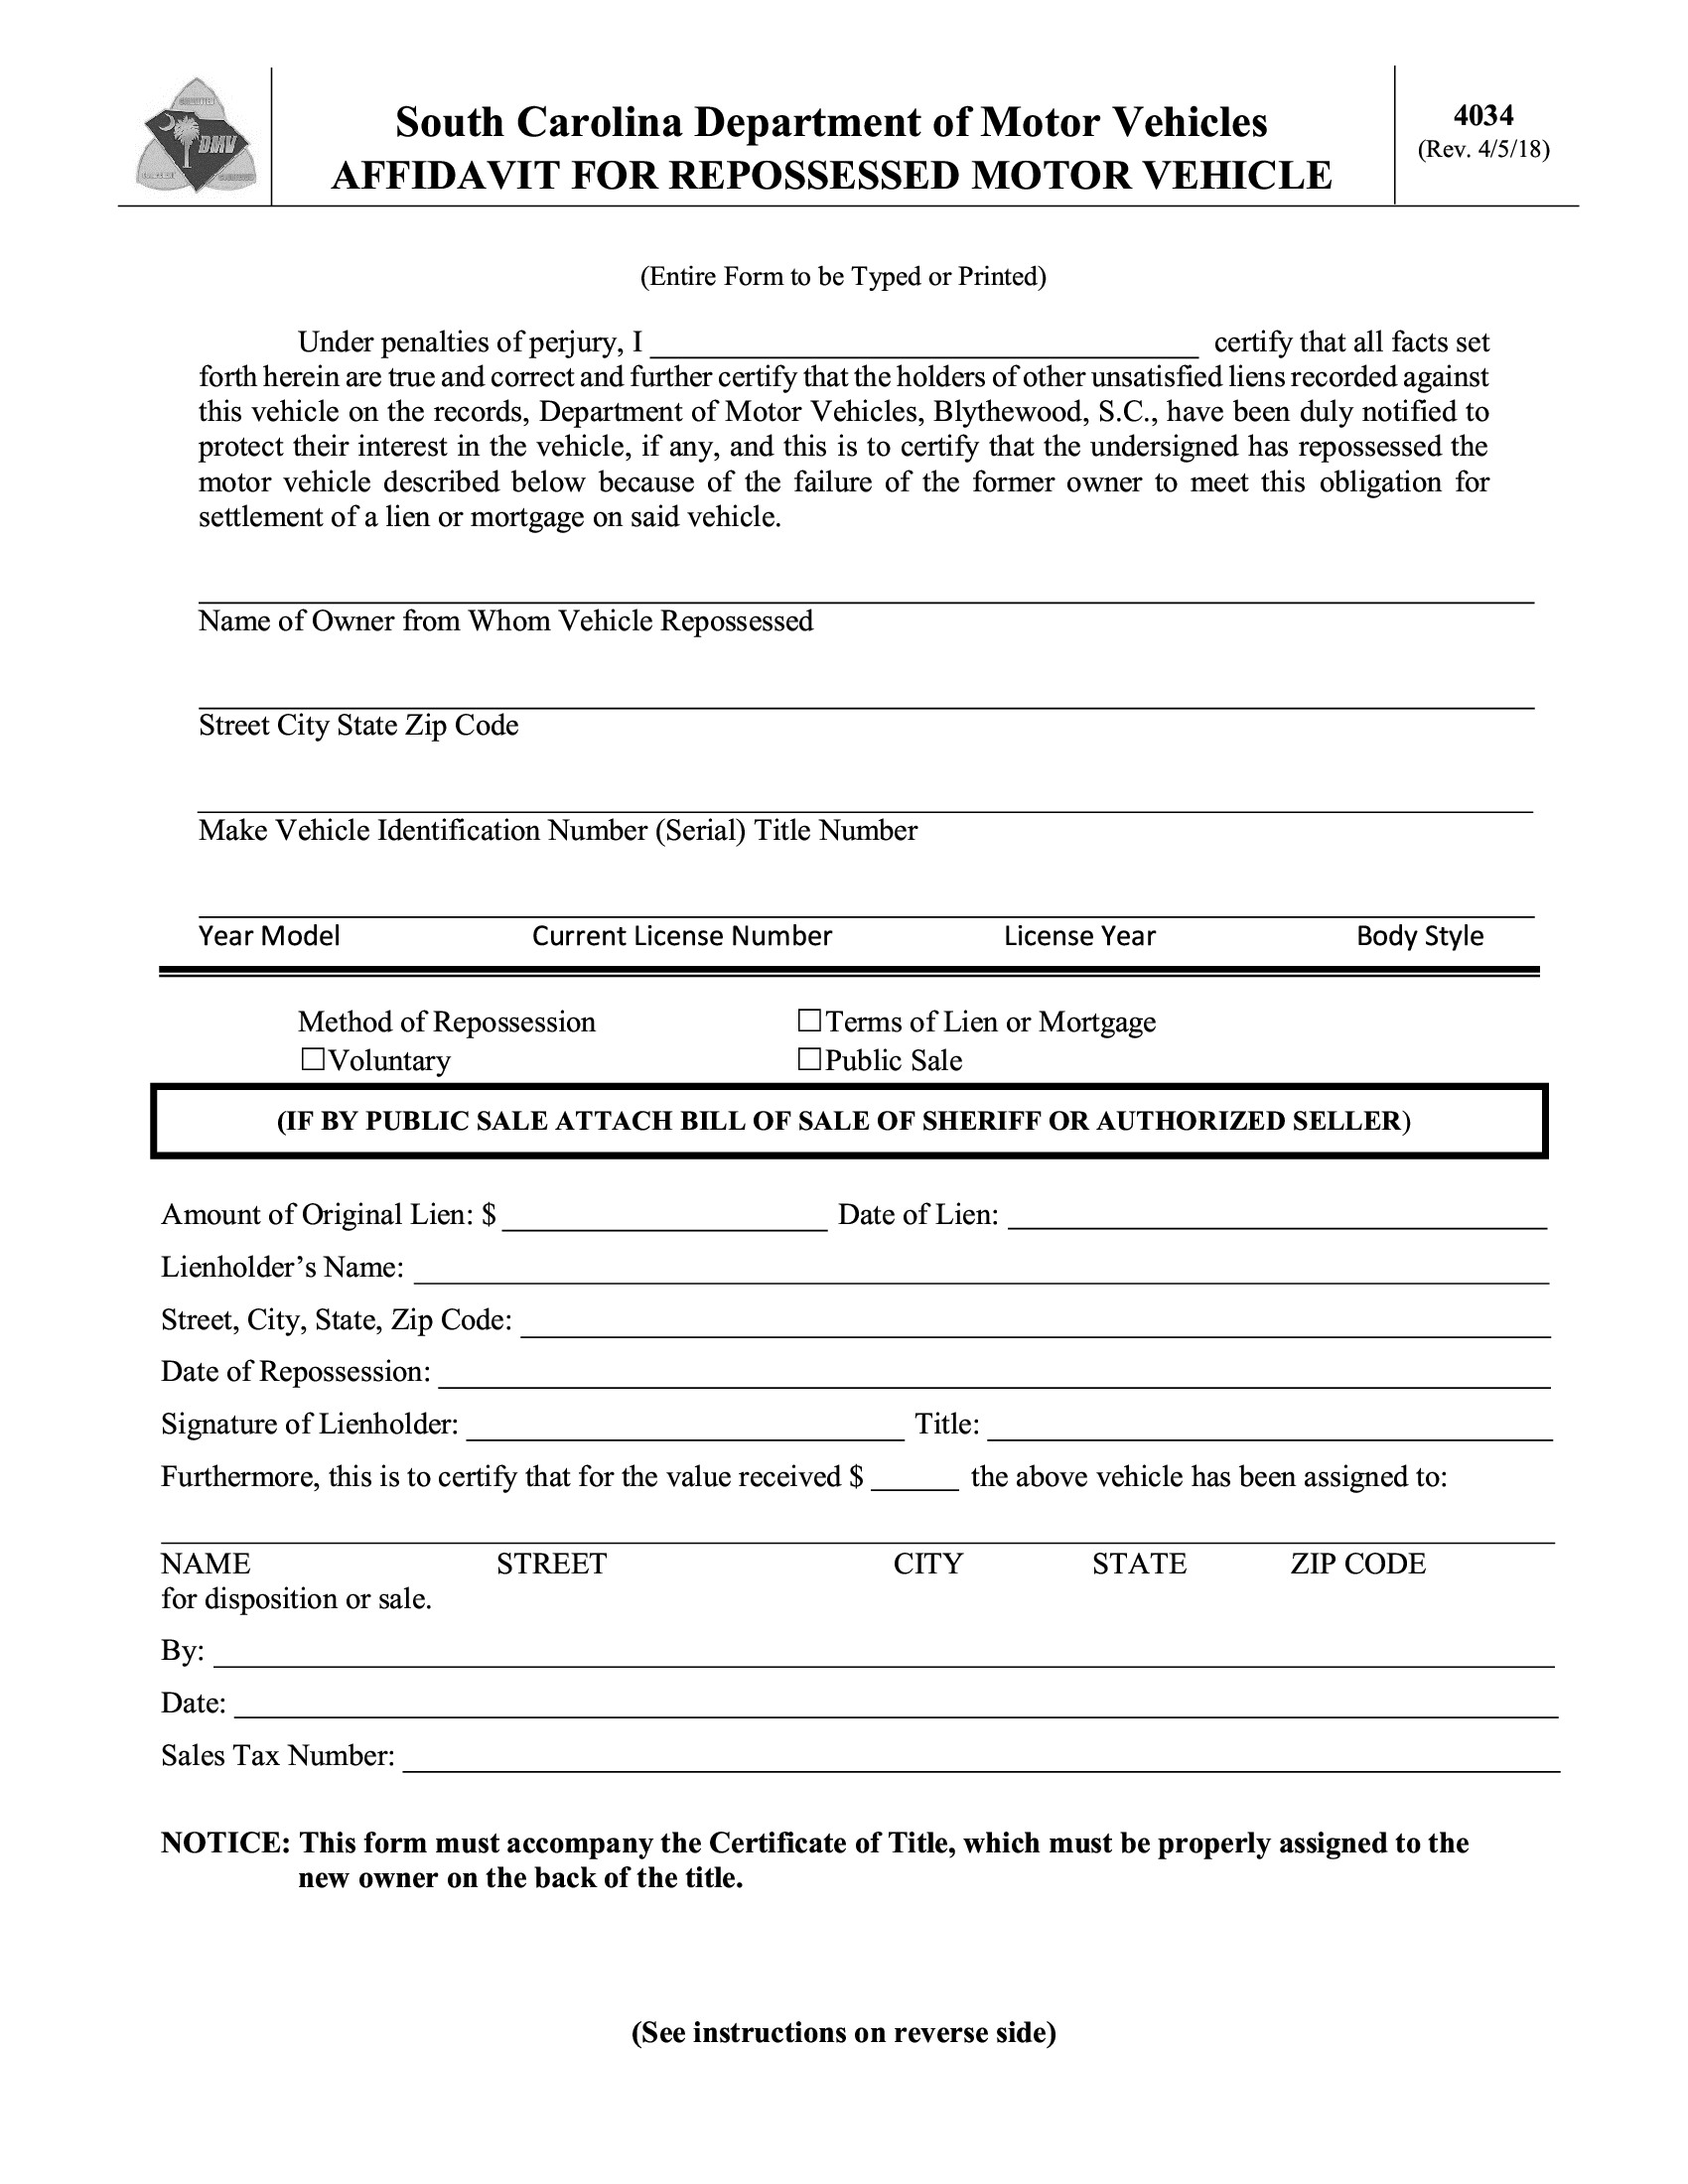 SCDMV Form 4034. Affidavit for Repossessed Motor Vehicle Forms Docs